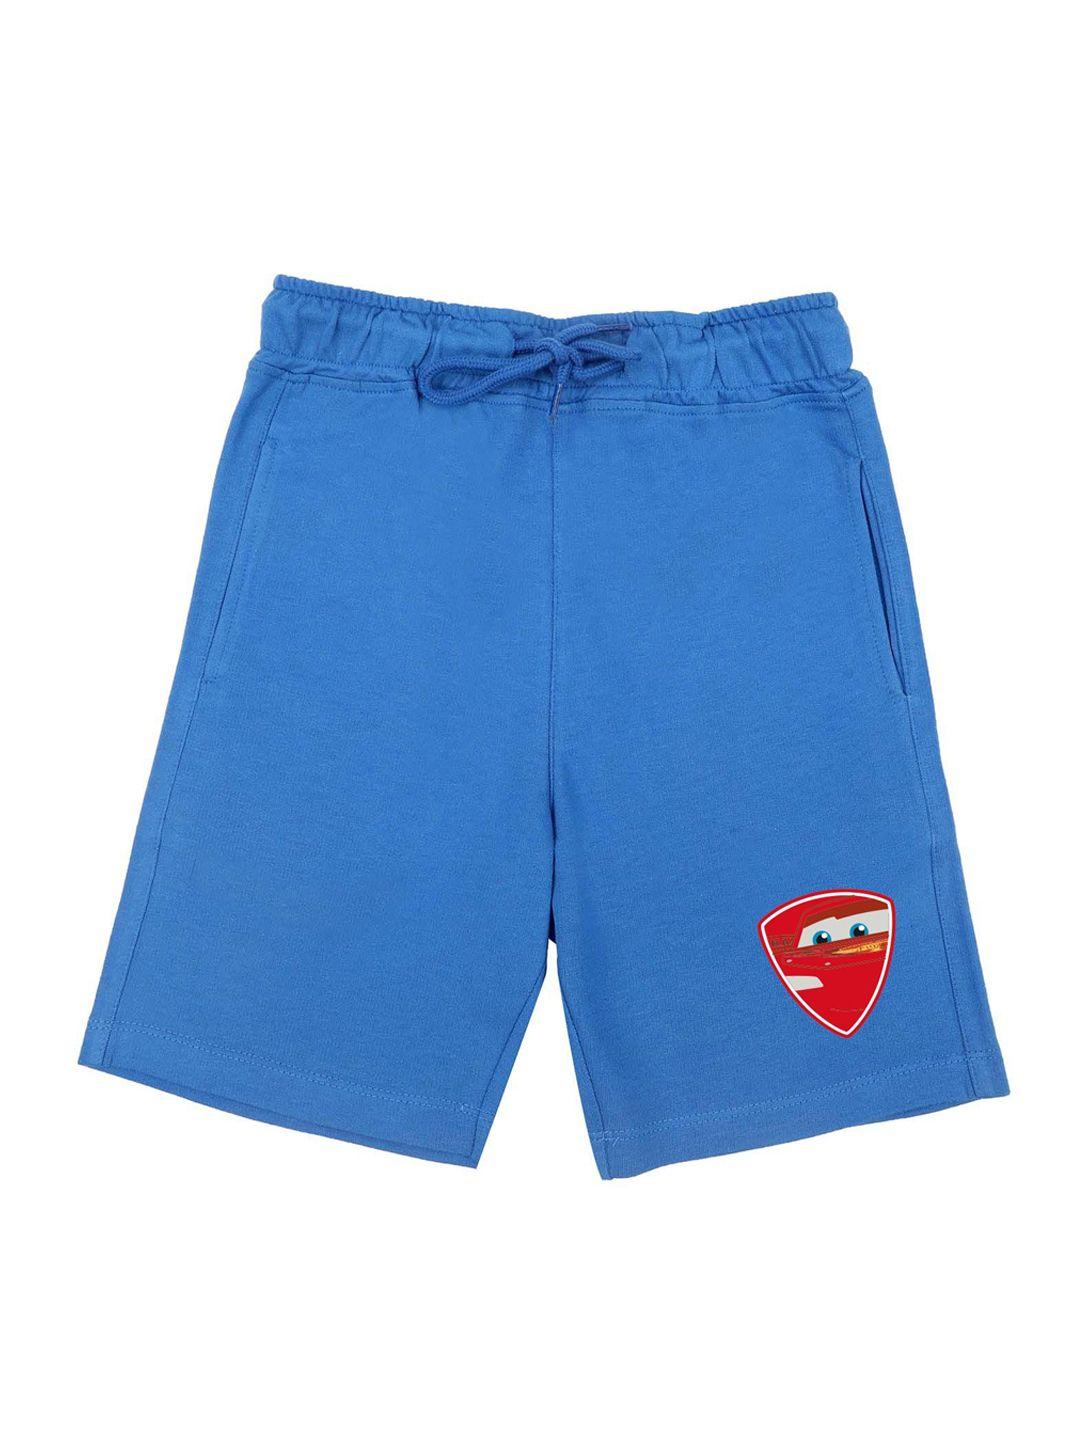 disney by wear your mind boys blue solid regular fit regular shorts